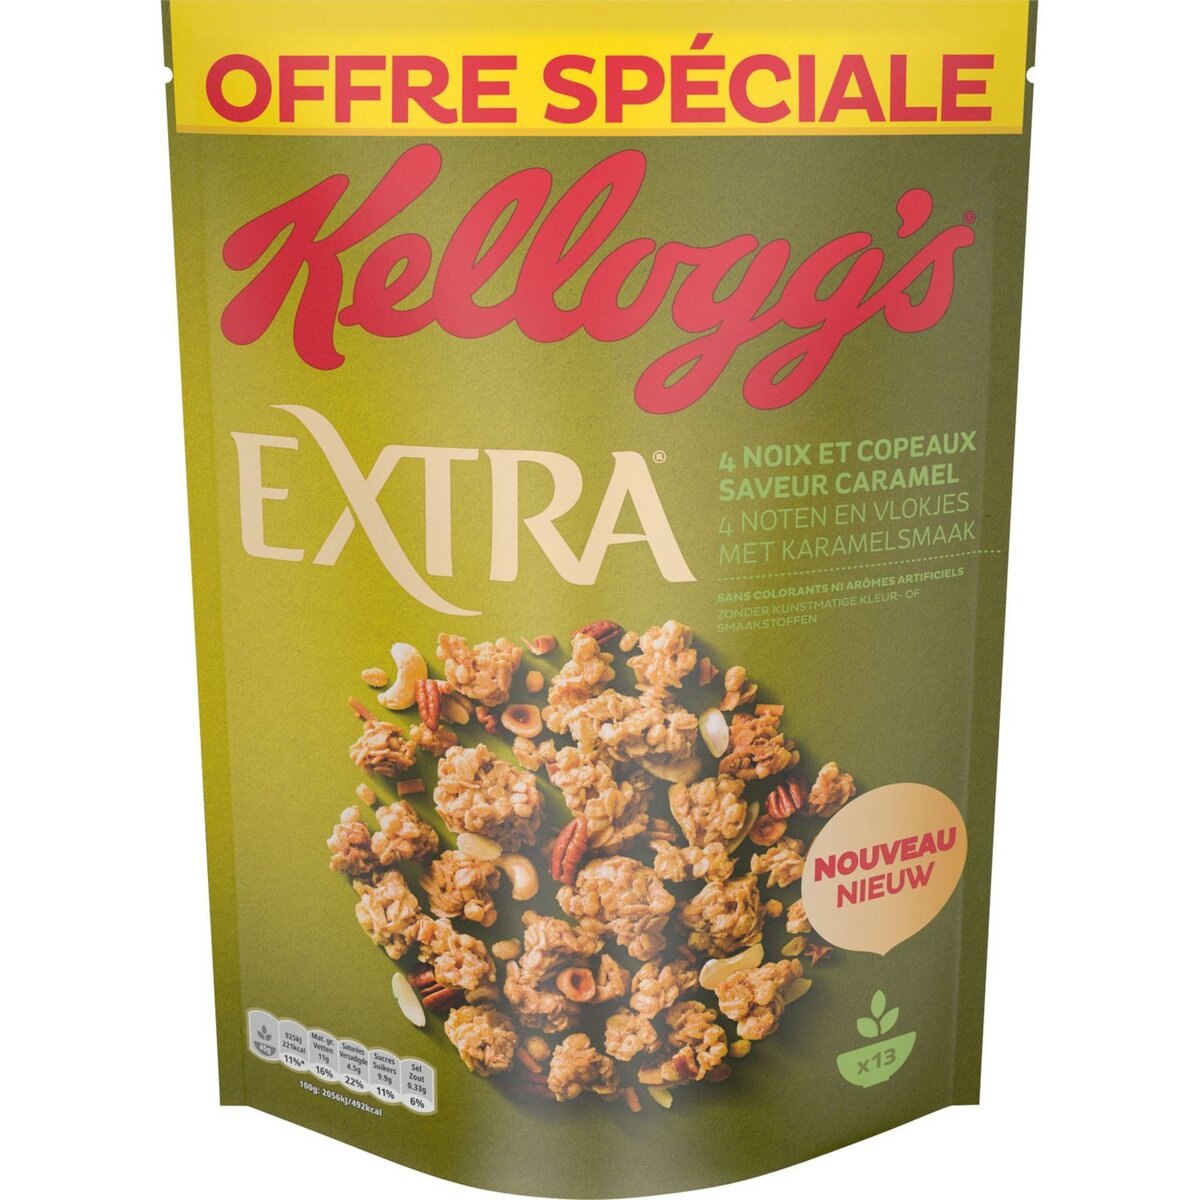 KELLOGG'S Kellogg's extra 4nuts et caramel 600g 600g